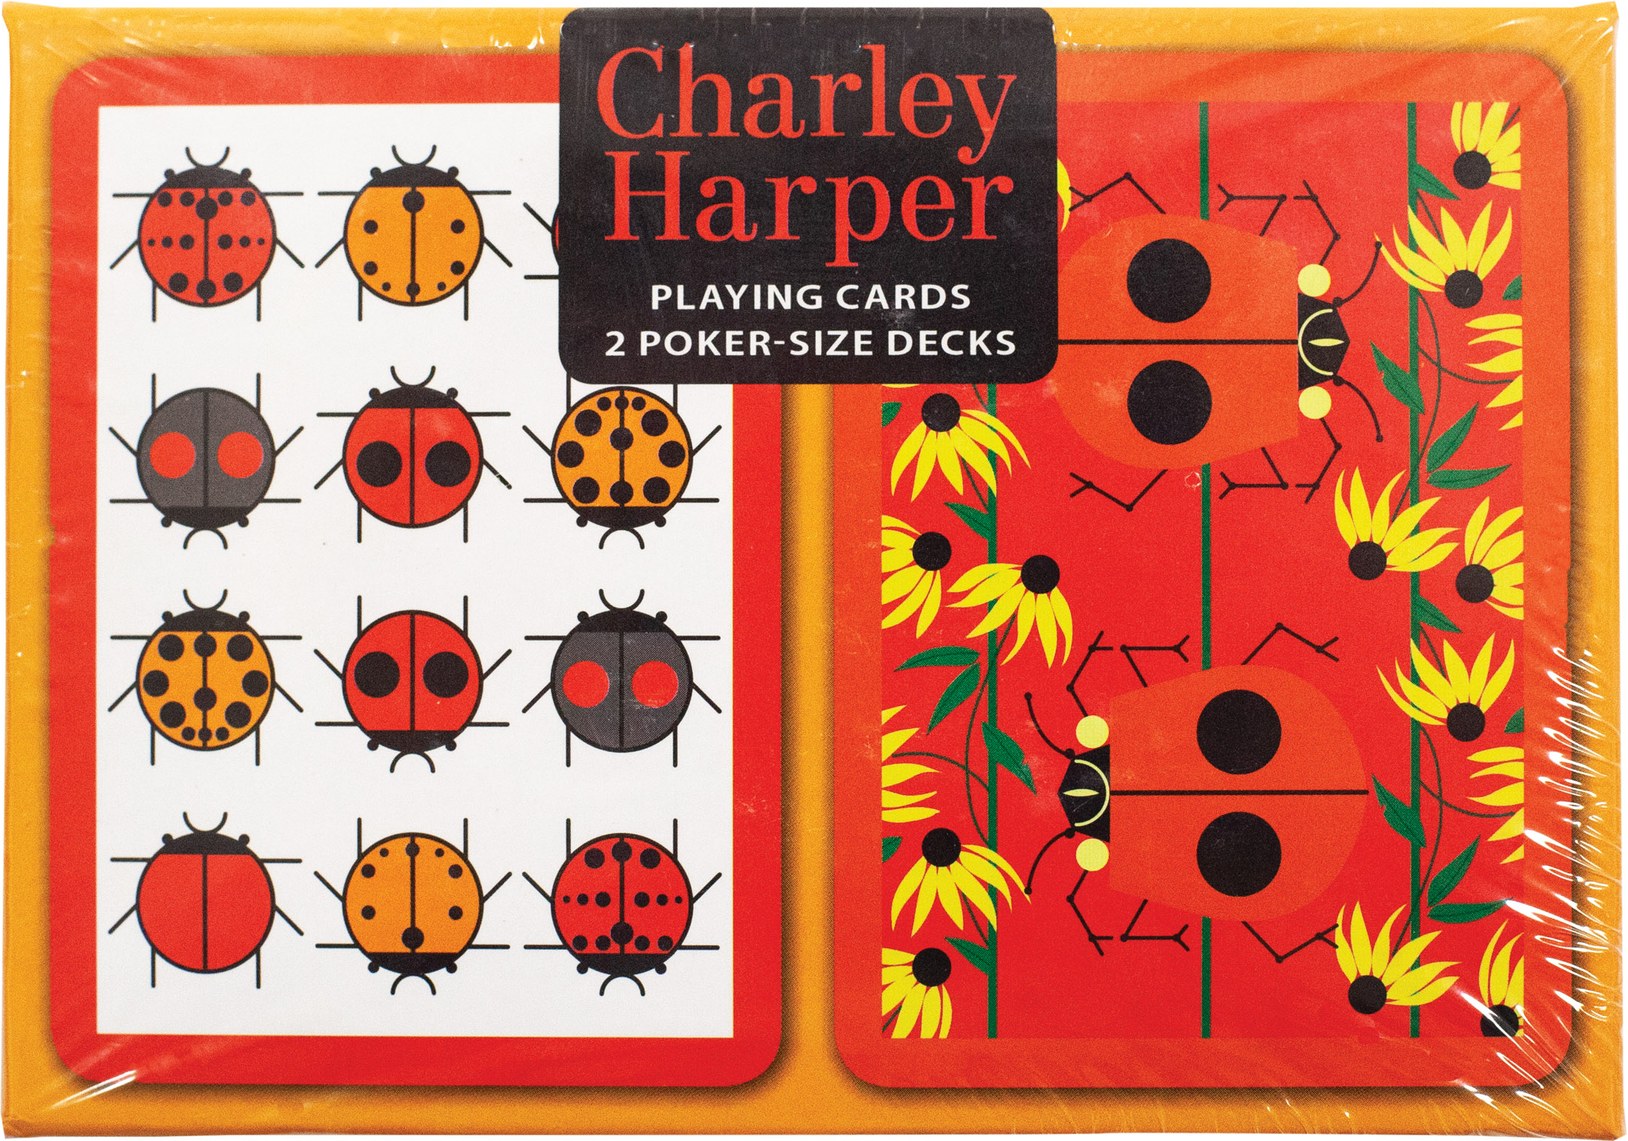 photo of Charley Harper poker card decks